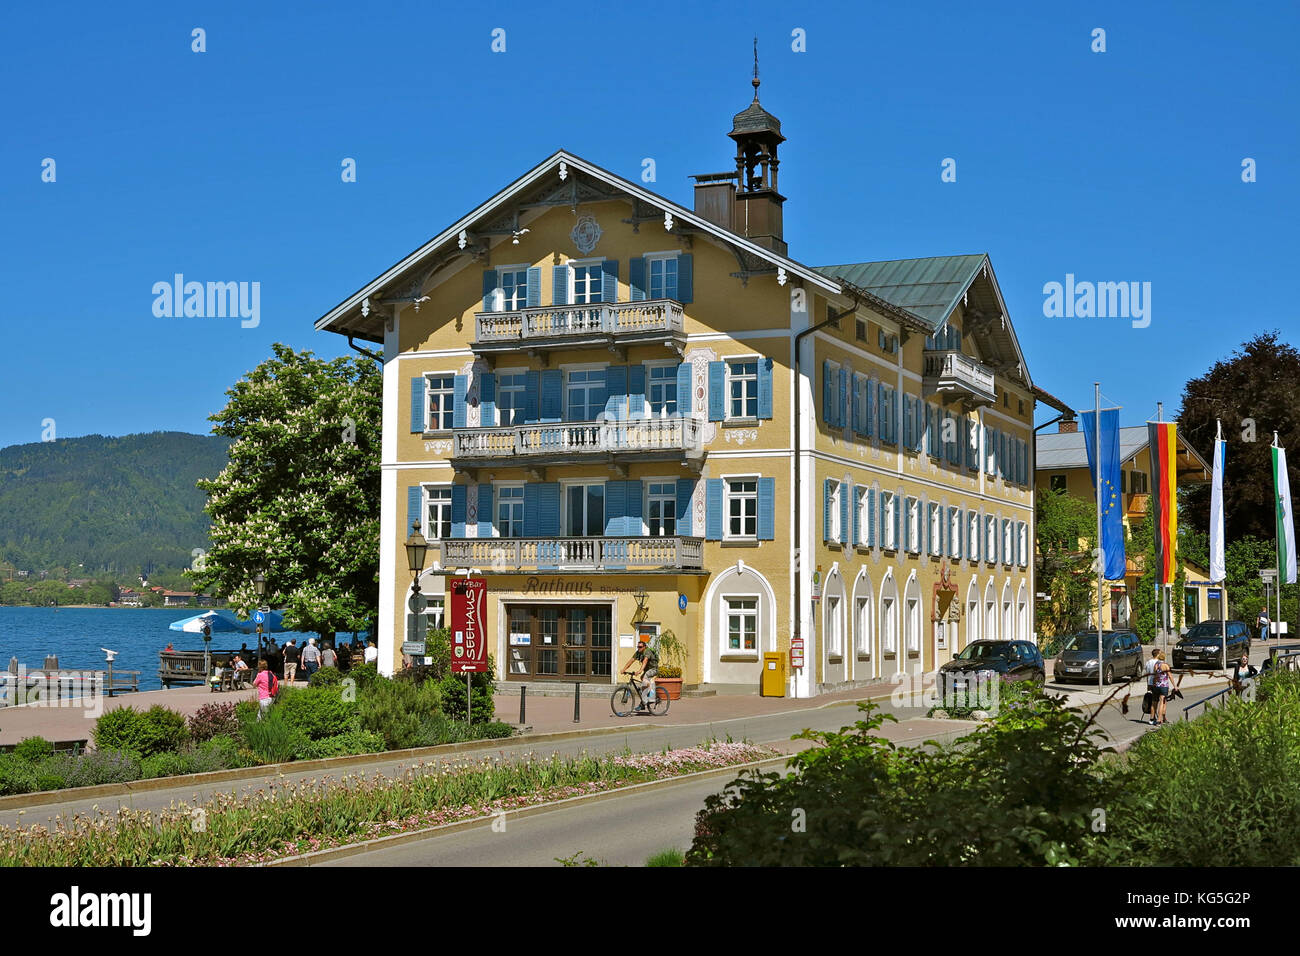 Germany, Bavaria, Tegernsee, lake, town hall, street, cars, flags, garden restaurant, Stock Photo